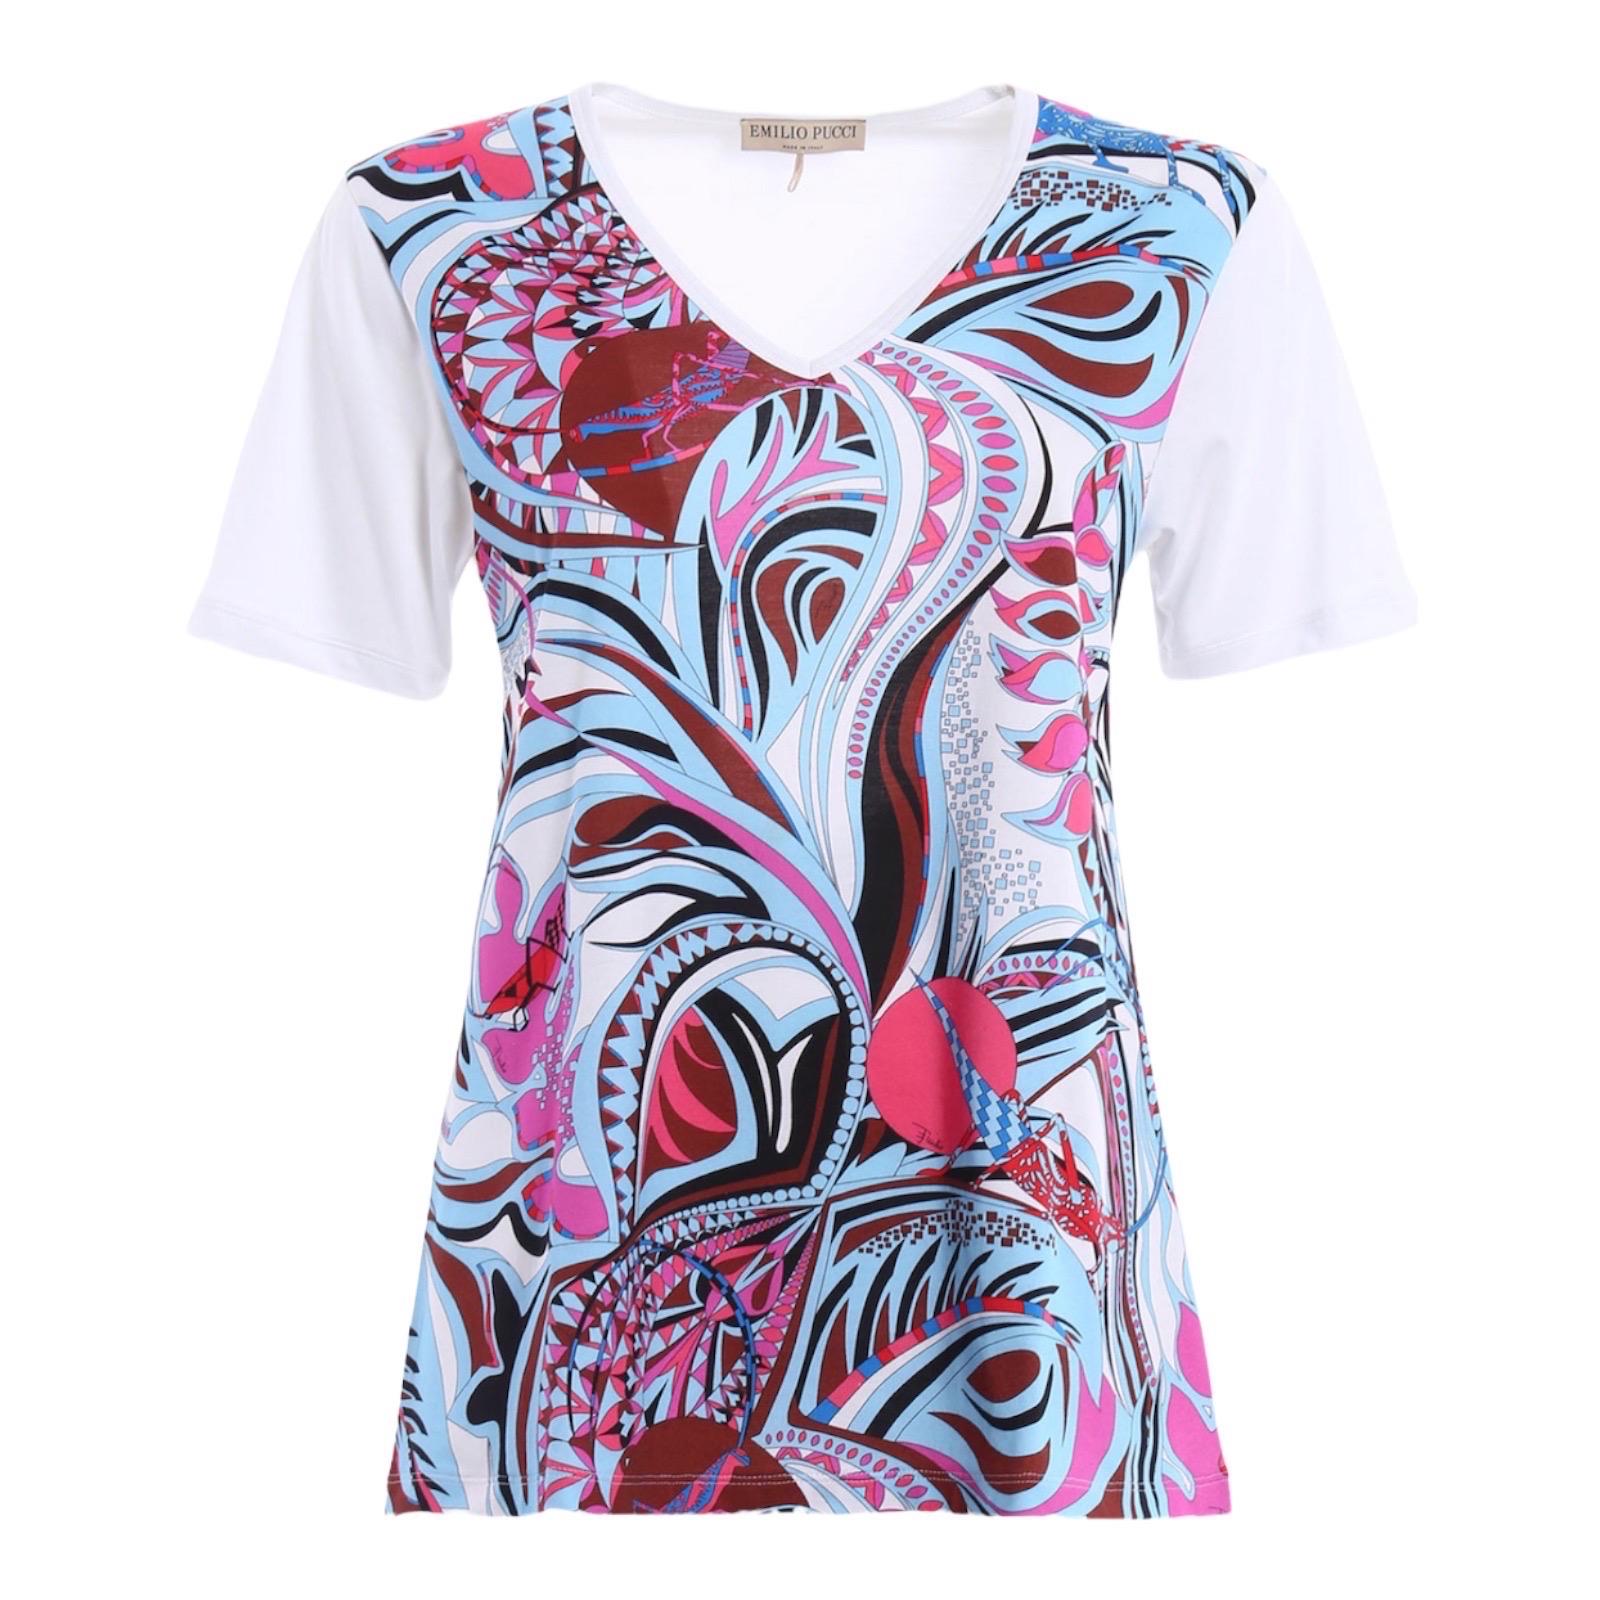 UNWORN Emilio Pucci Tropical Floral Animal Signature Print T-Shirt M For Sale 2